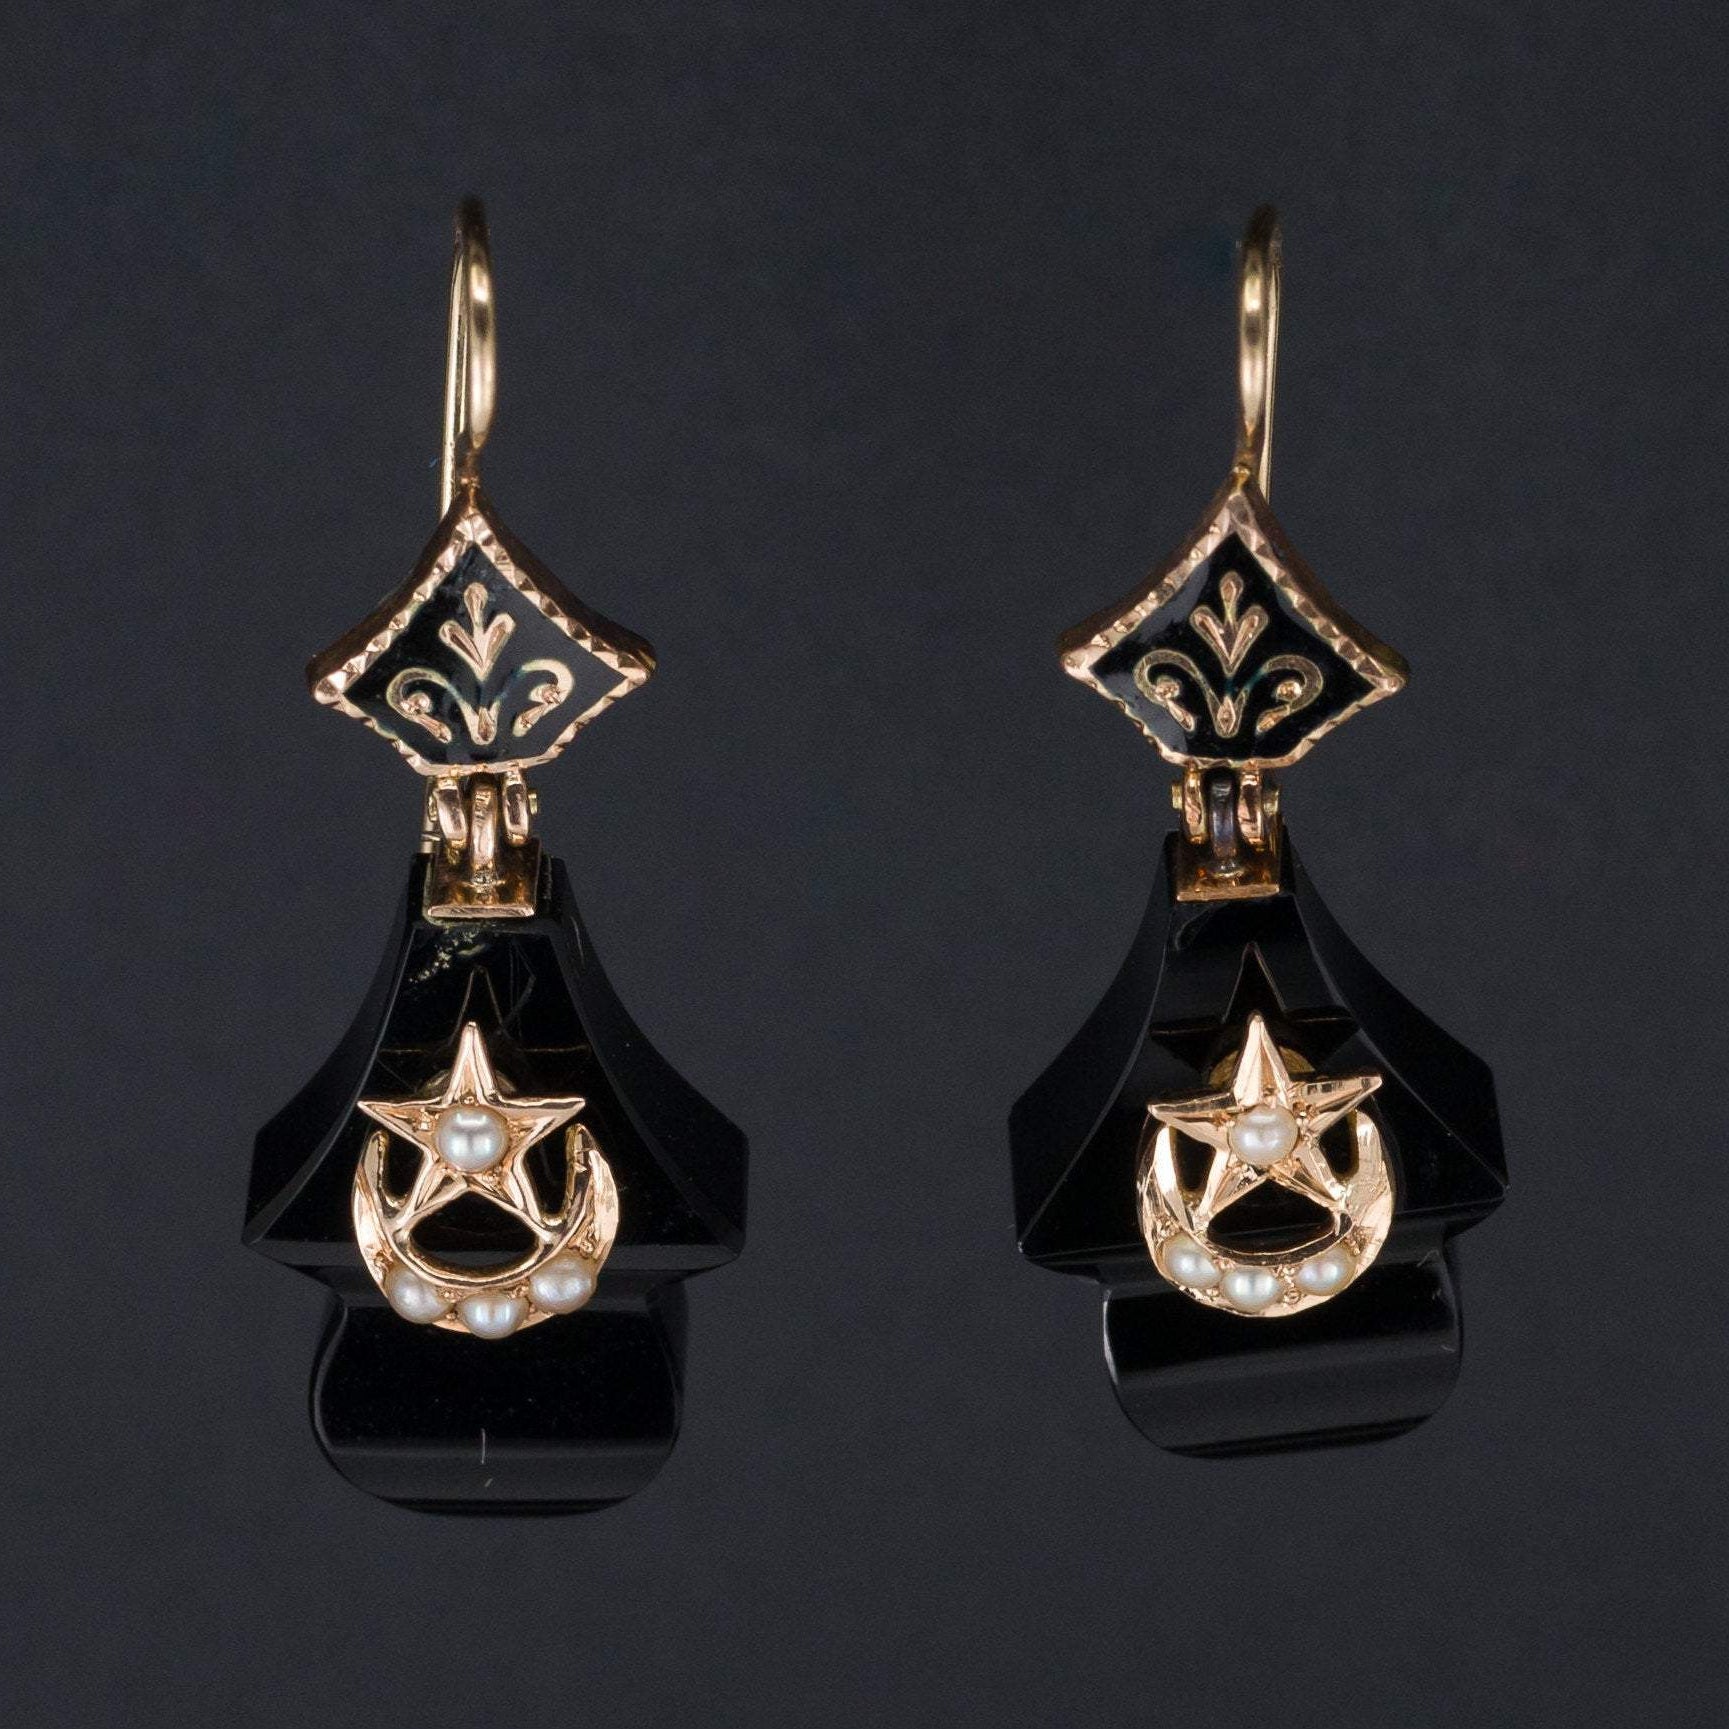 Antique Onyx Earrings | Antique Crescent Moon & Star Earrings | Onyx Earrings | 14k Gold Earrings | Victorian Earrings | Antique Earrings